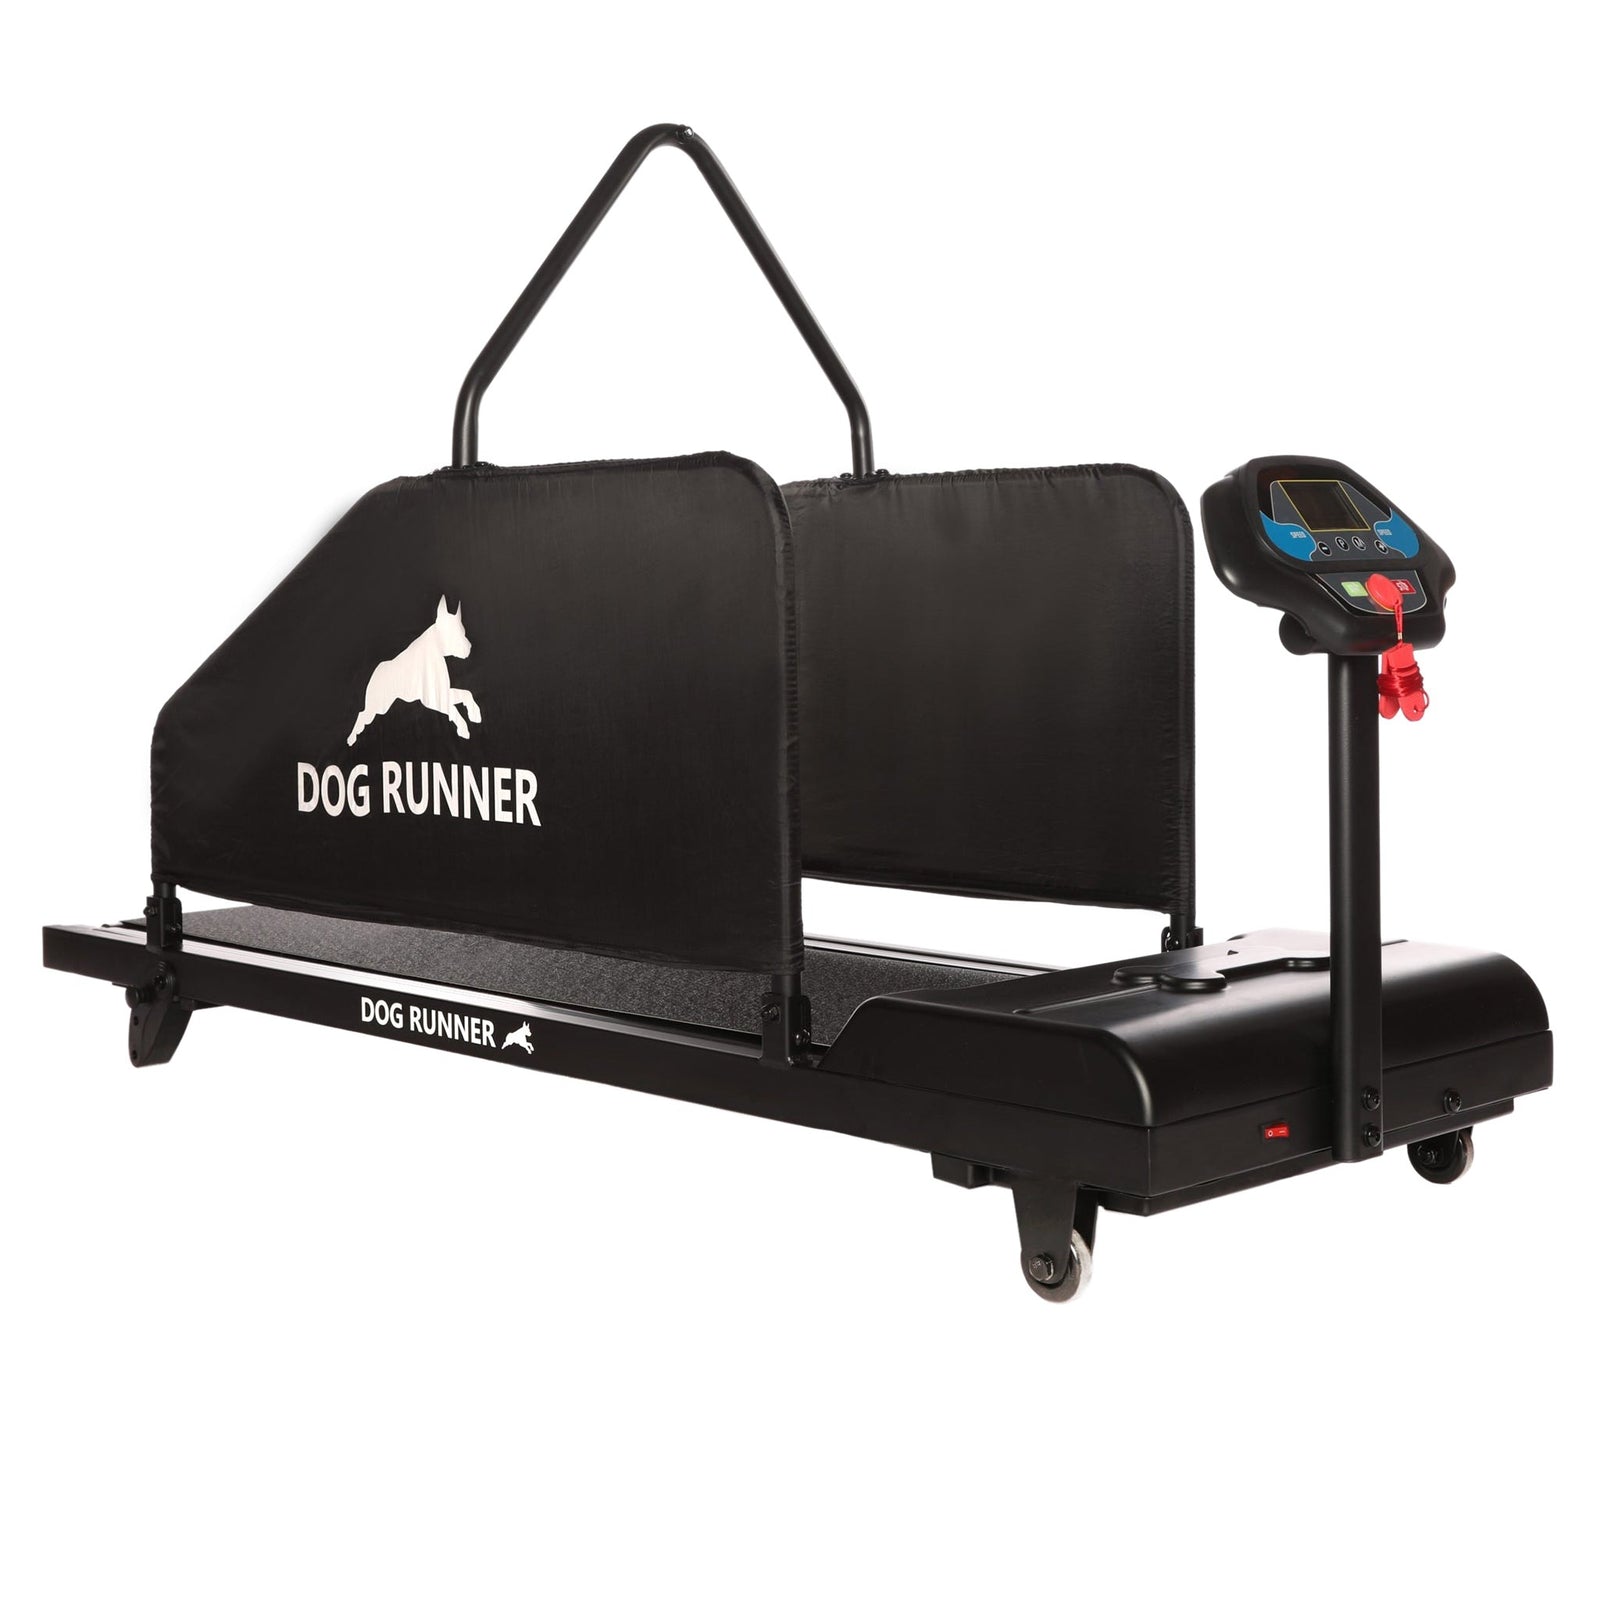 Dog treadmills sell at fast clip